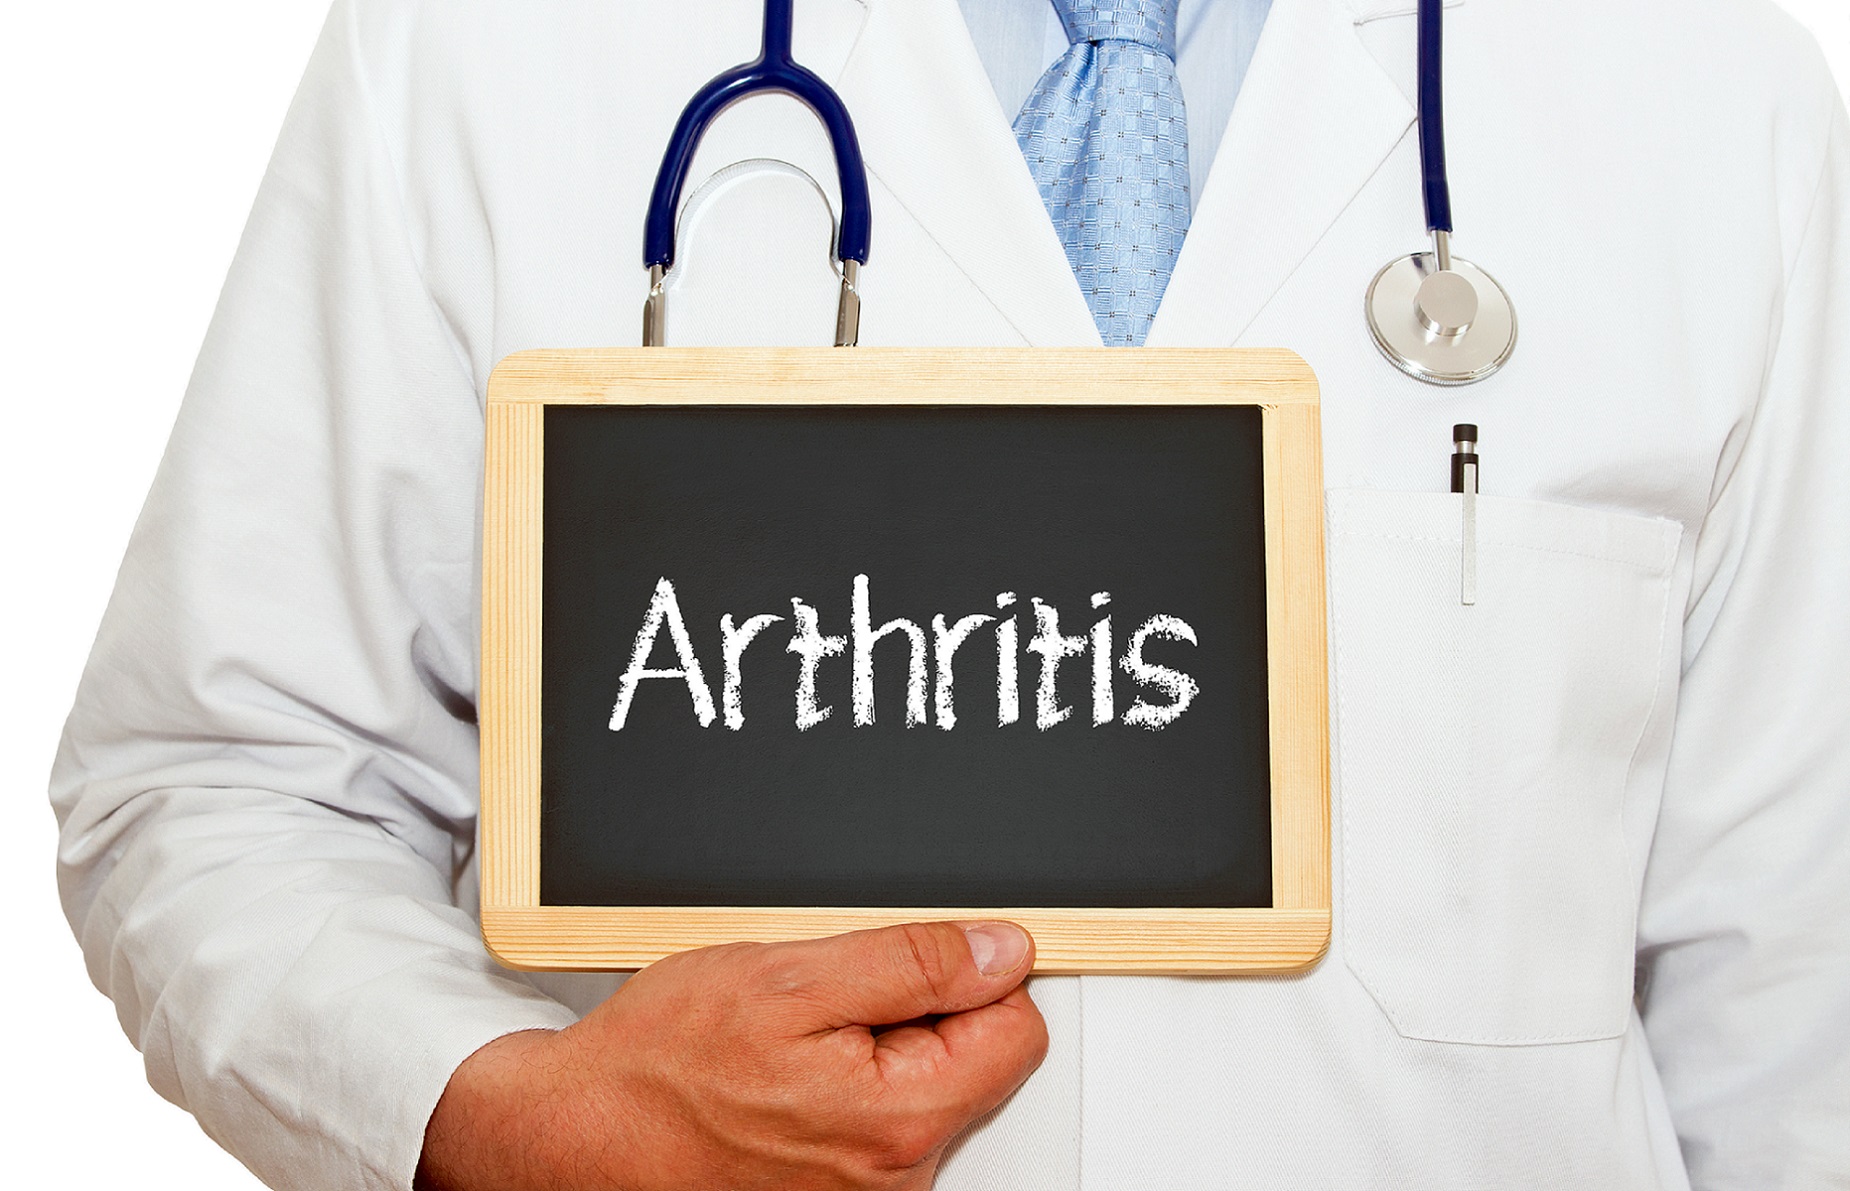 artritis reumatoide